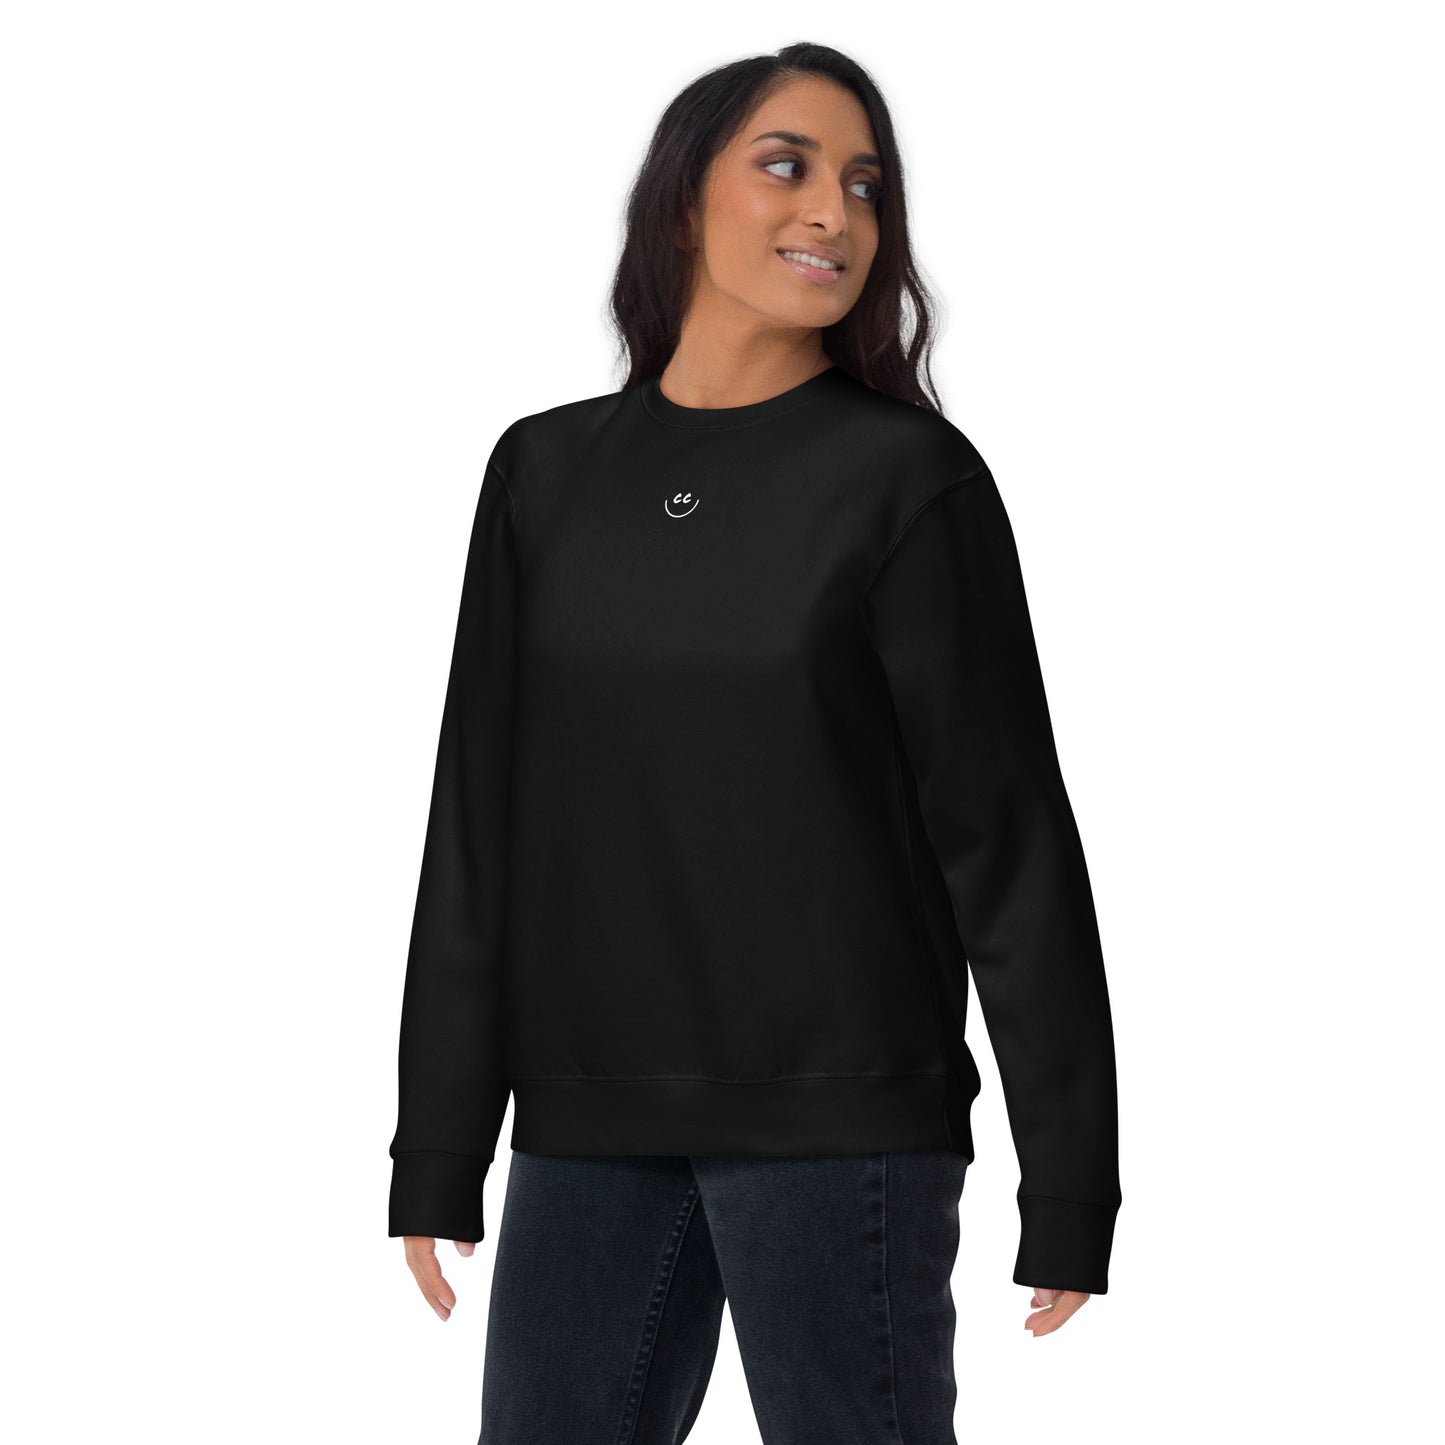 Little Smile Fleece in Black - Sweatshirt